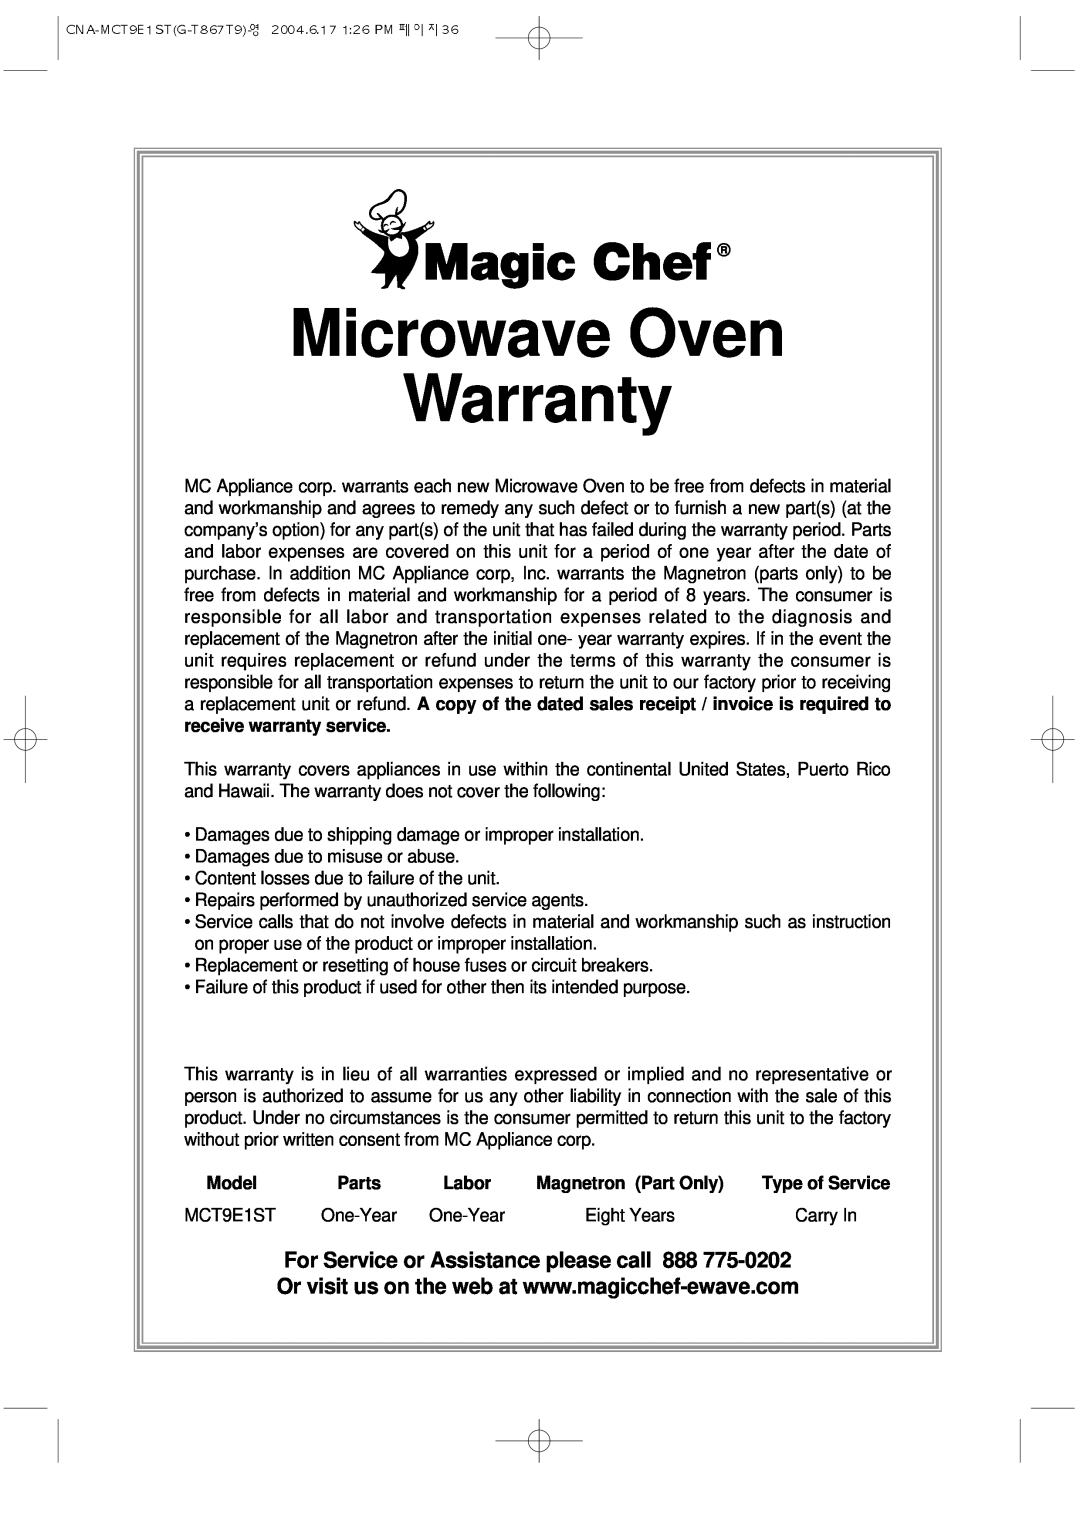 Magic Chef MCT9E1ST manual Microwave Oven Warranty 